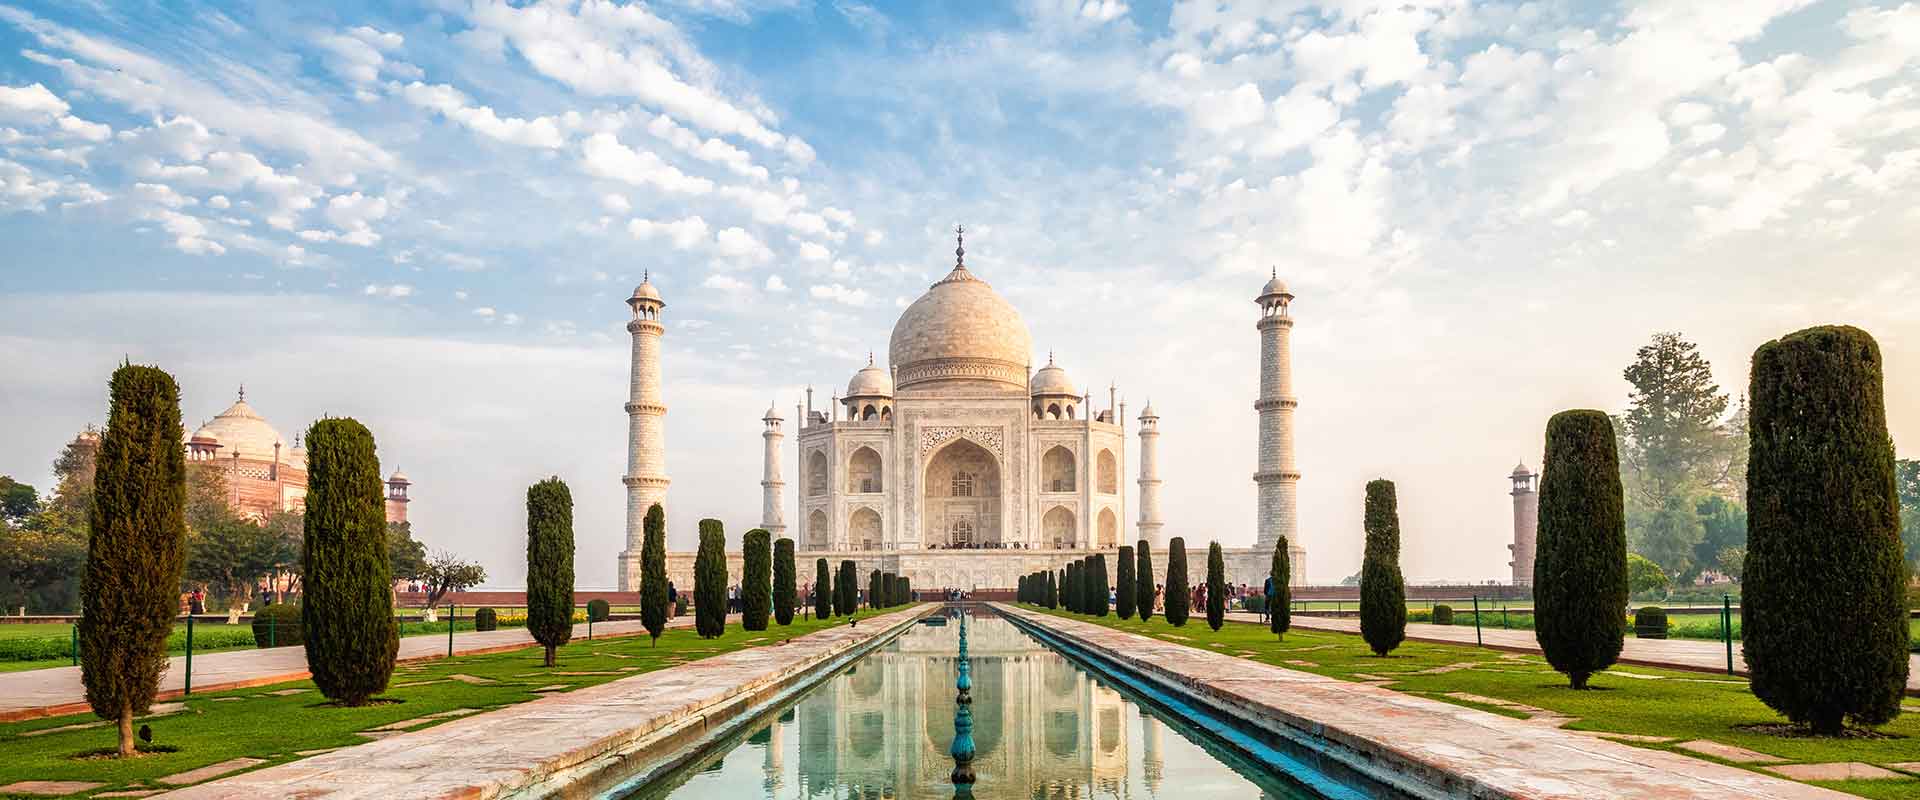 History of Taj Mahal (Symbol of Love)